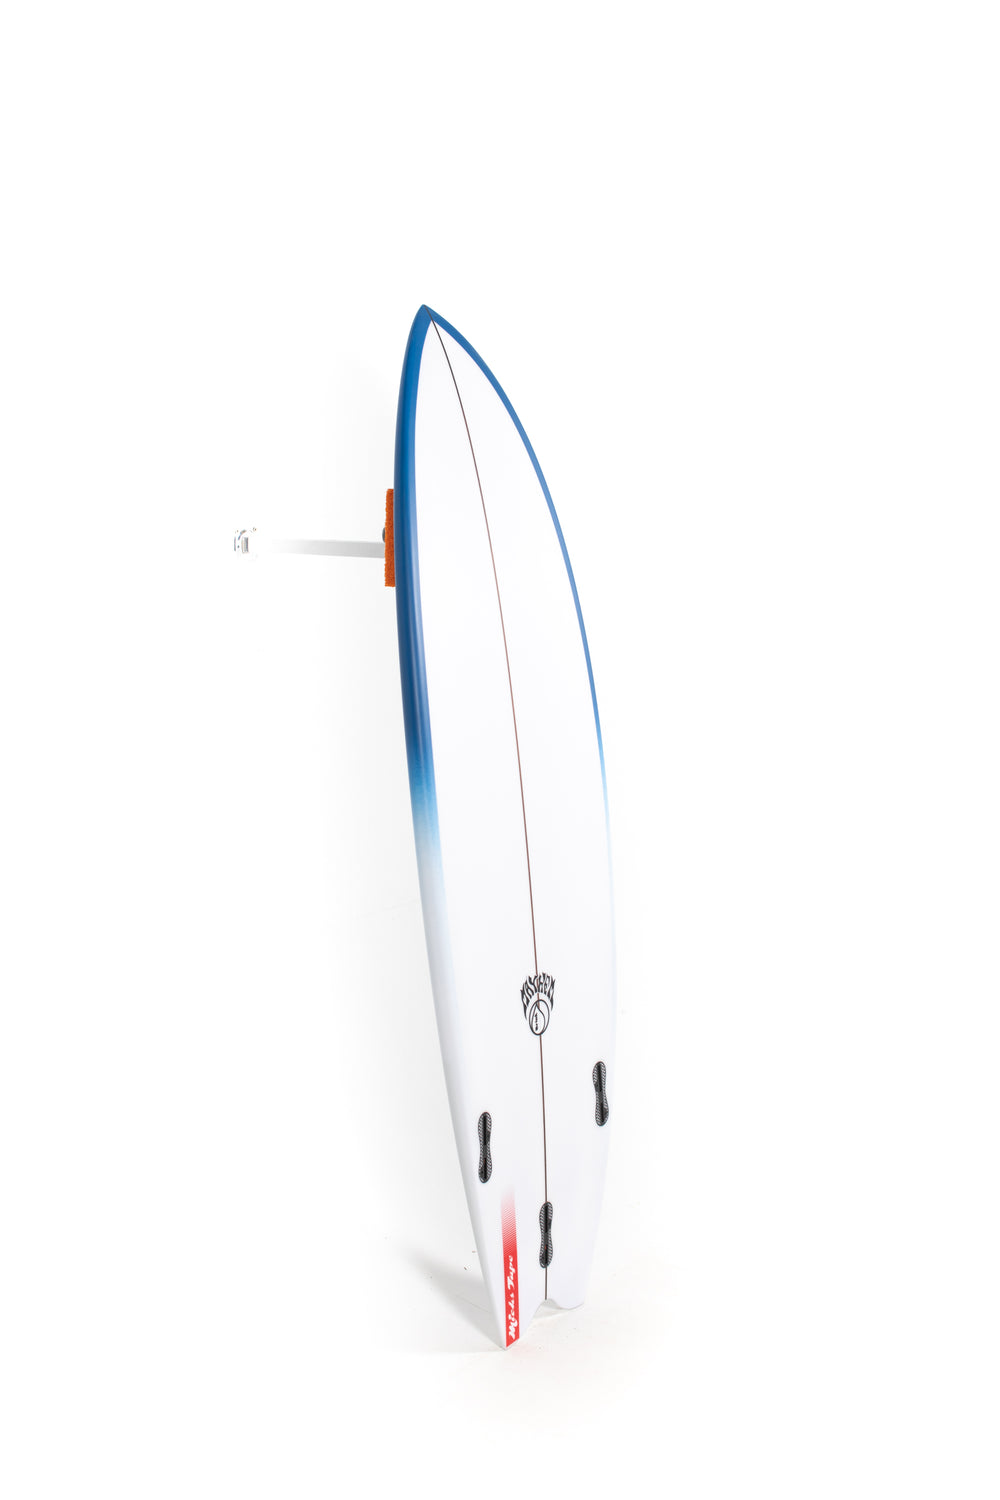 Lost Surfboard - MICK'S TAPE by Mayhem x Brink - 5'5” at PUKAS